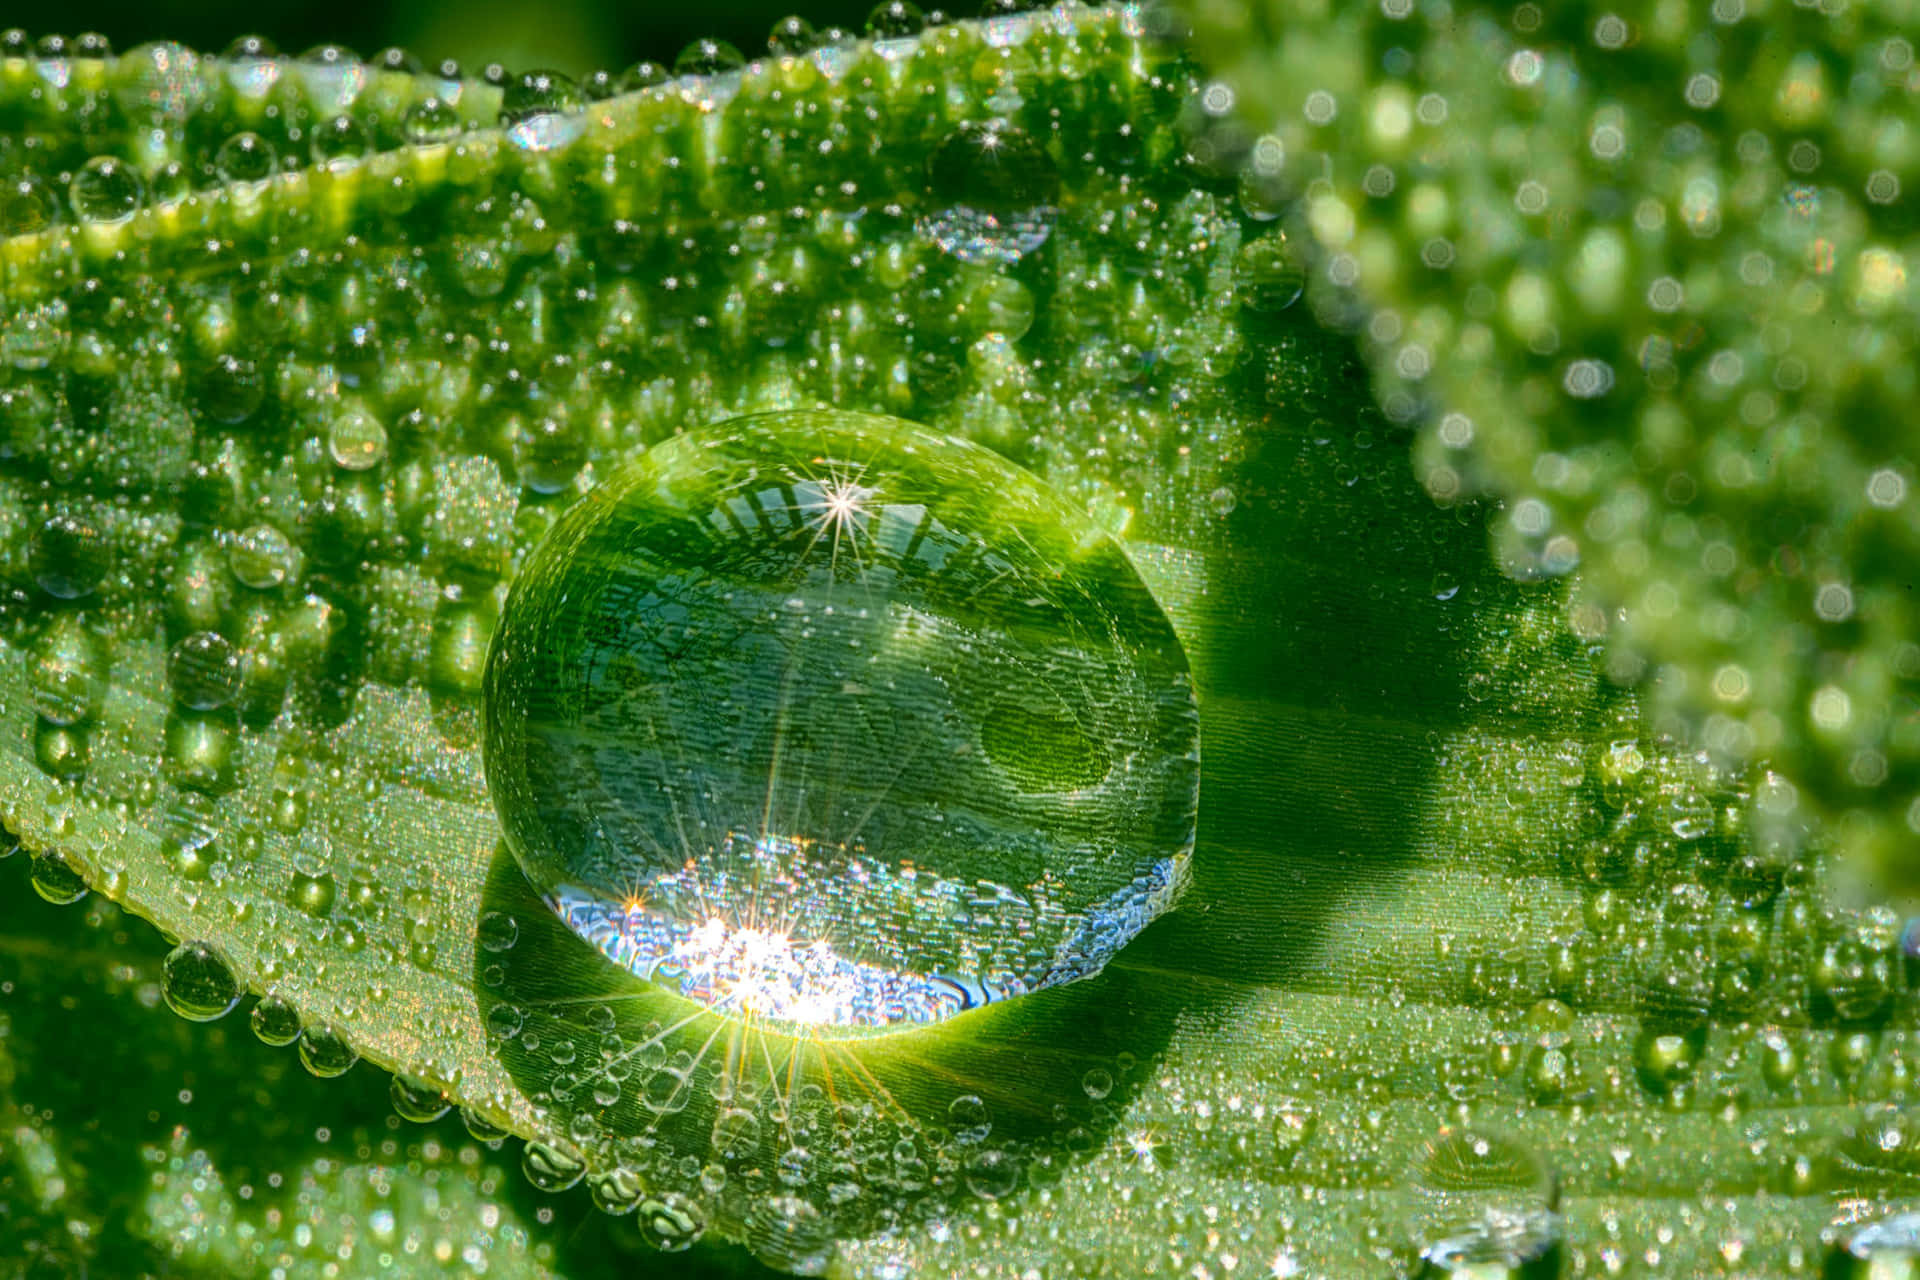 A water droplet in midair, awaiting its next destination.